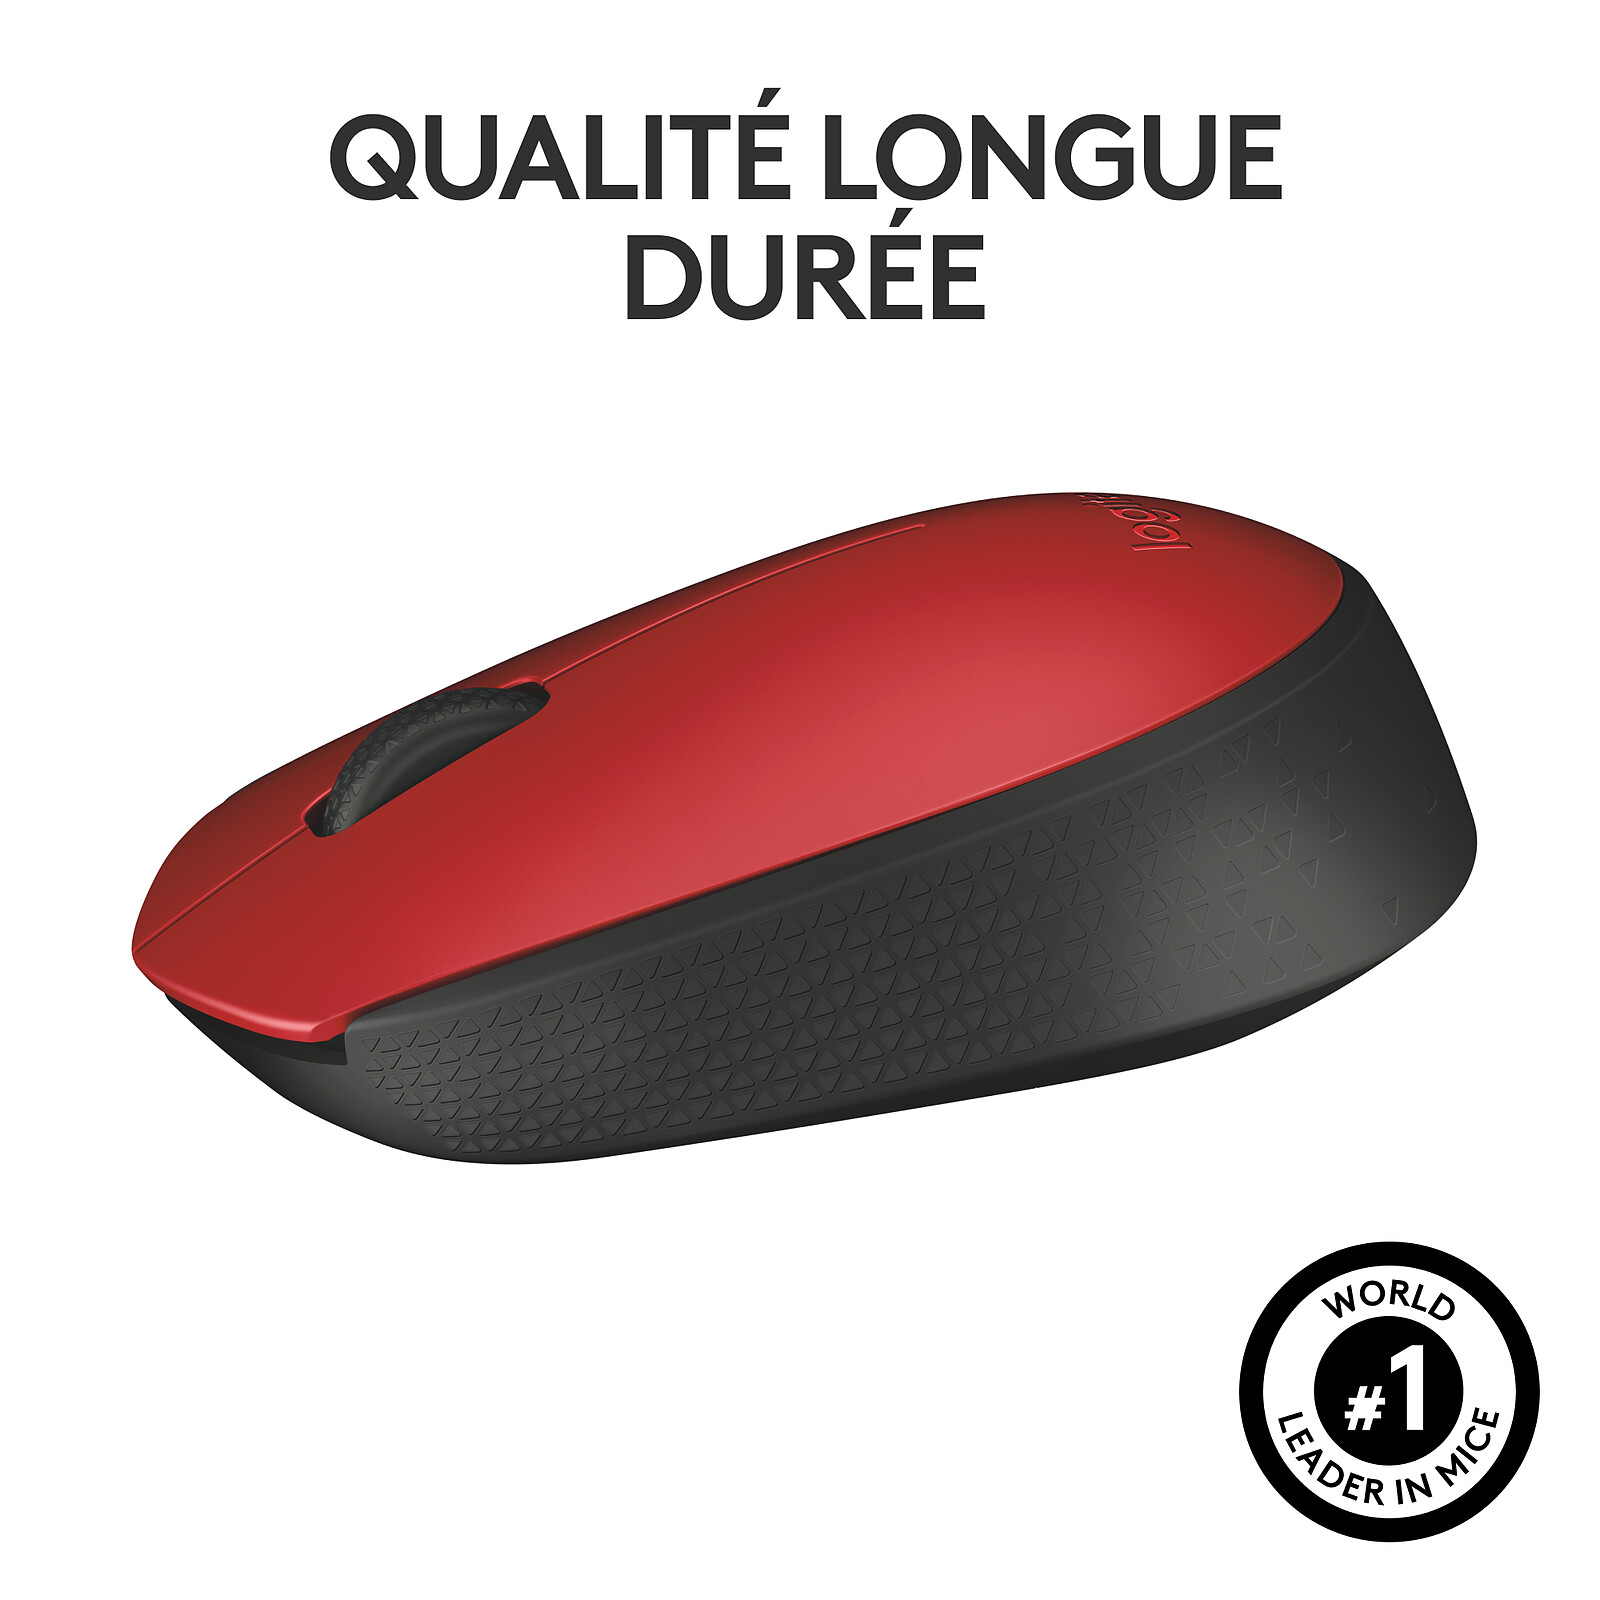 Logitech M171 Wireless Mouse (Red) - Mouse Logitech LDLC